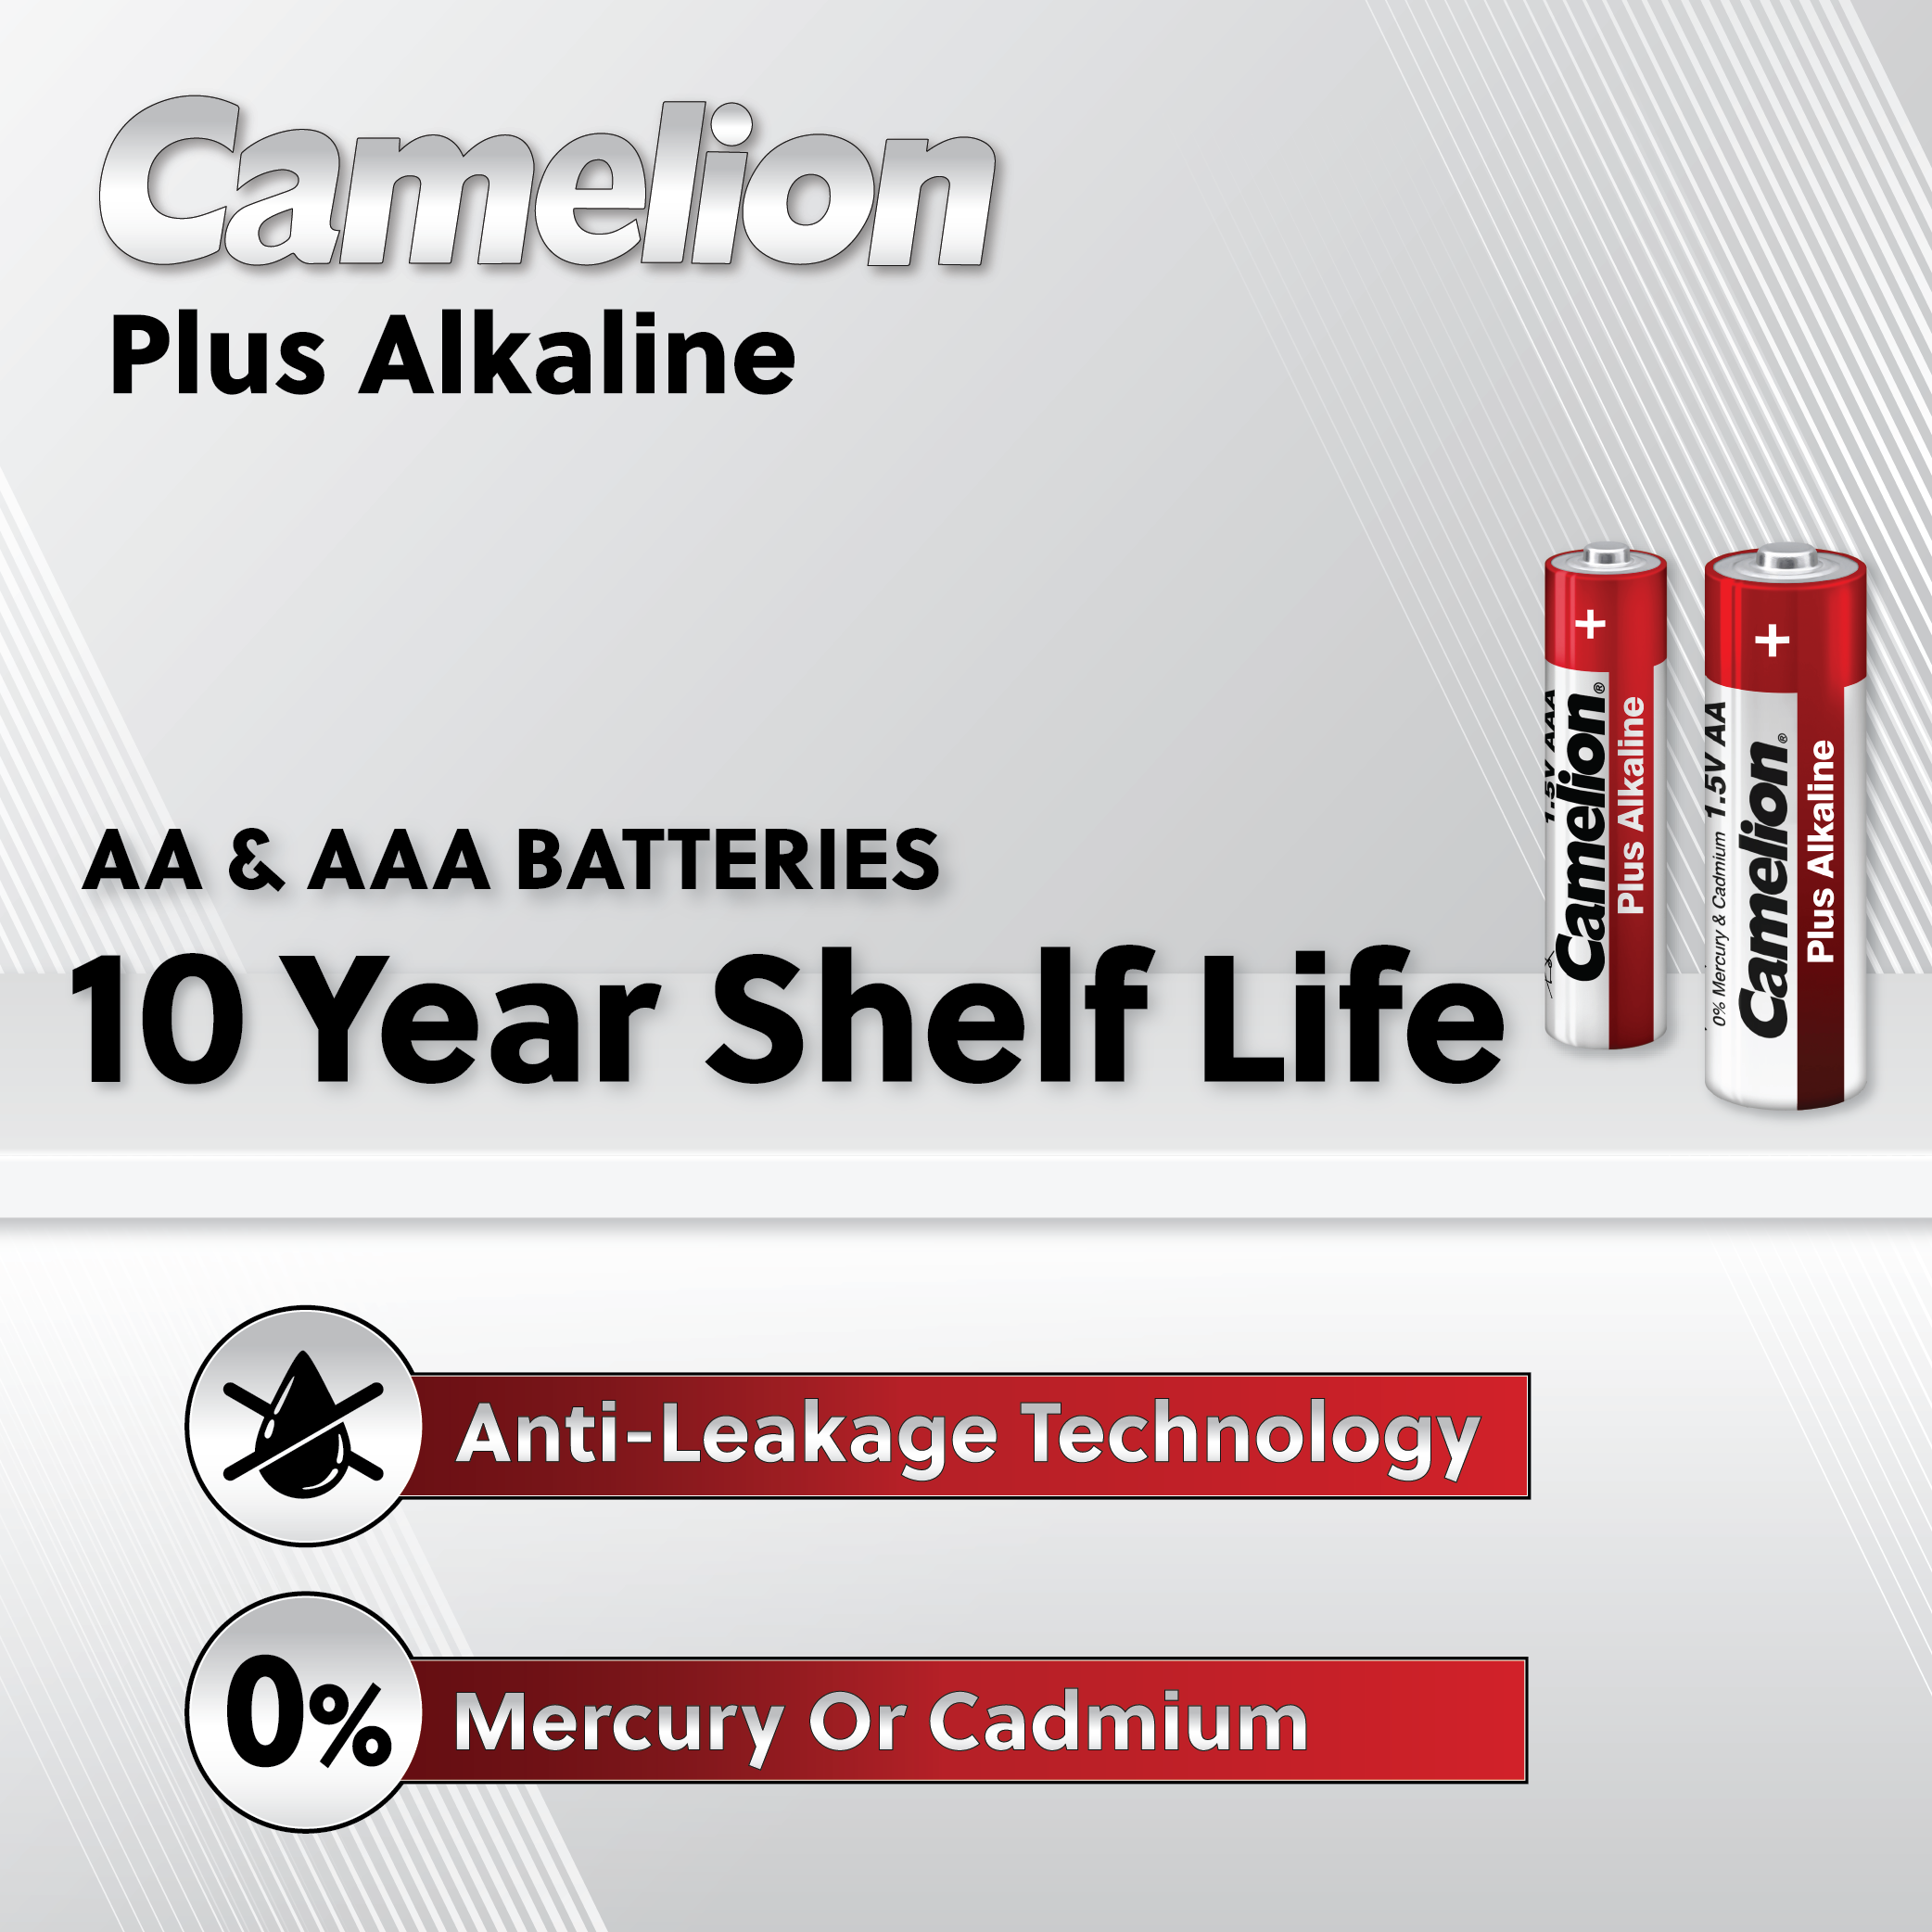 Camelion AA Plus Alkaline 4+2 Blister Pack